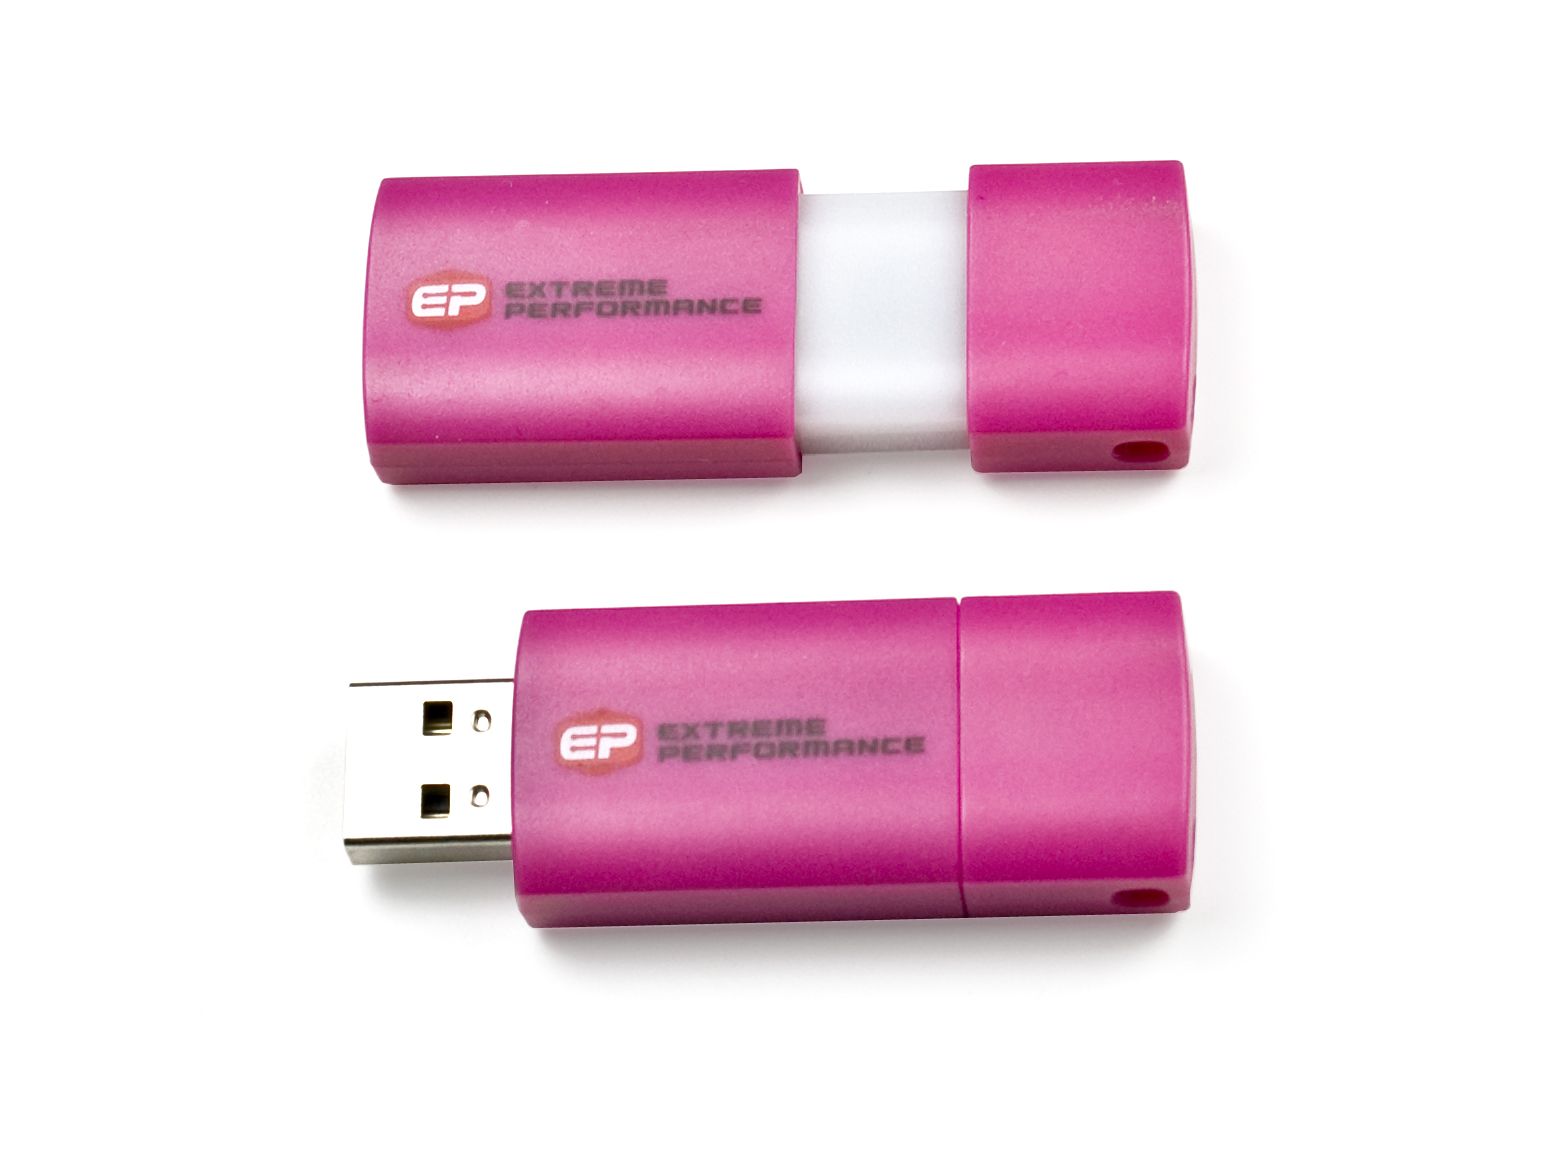 Maxell 8GB USB Flix Flash Drive Affordable Data Storage from Kmart